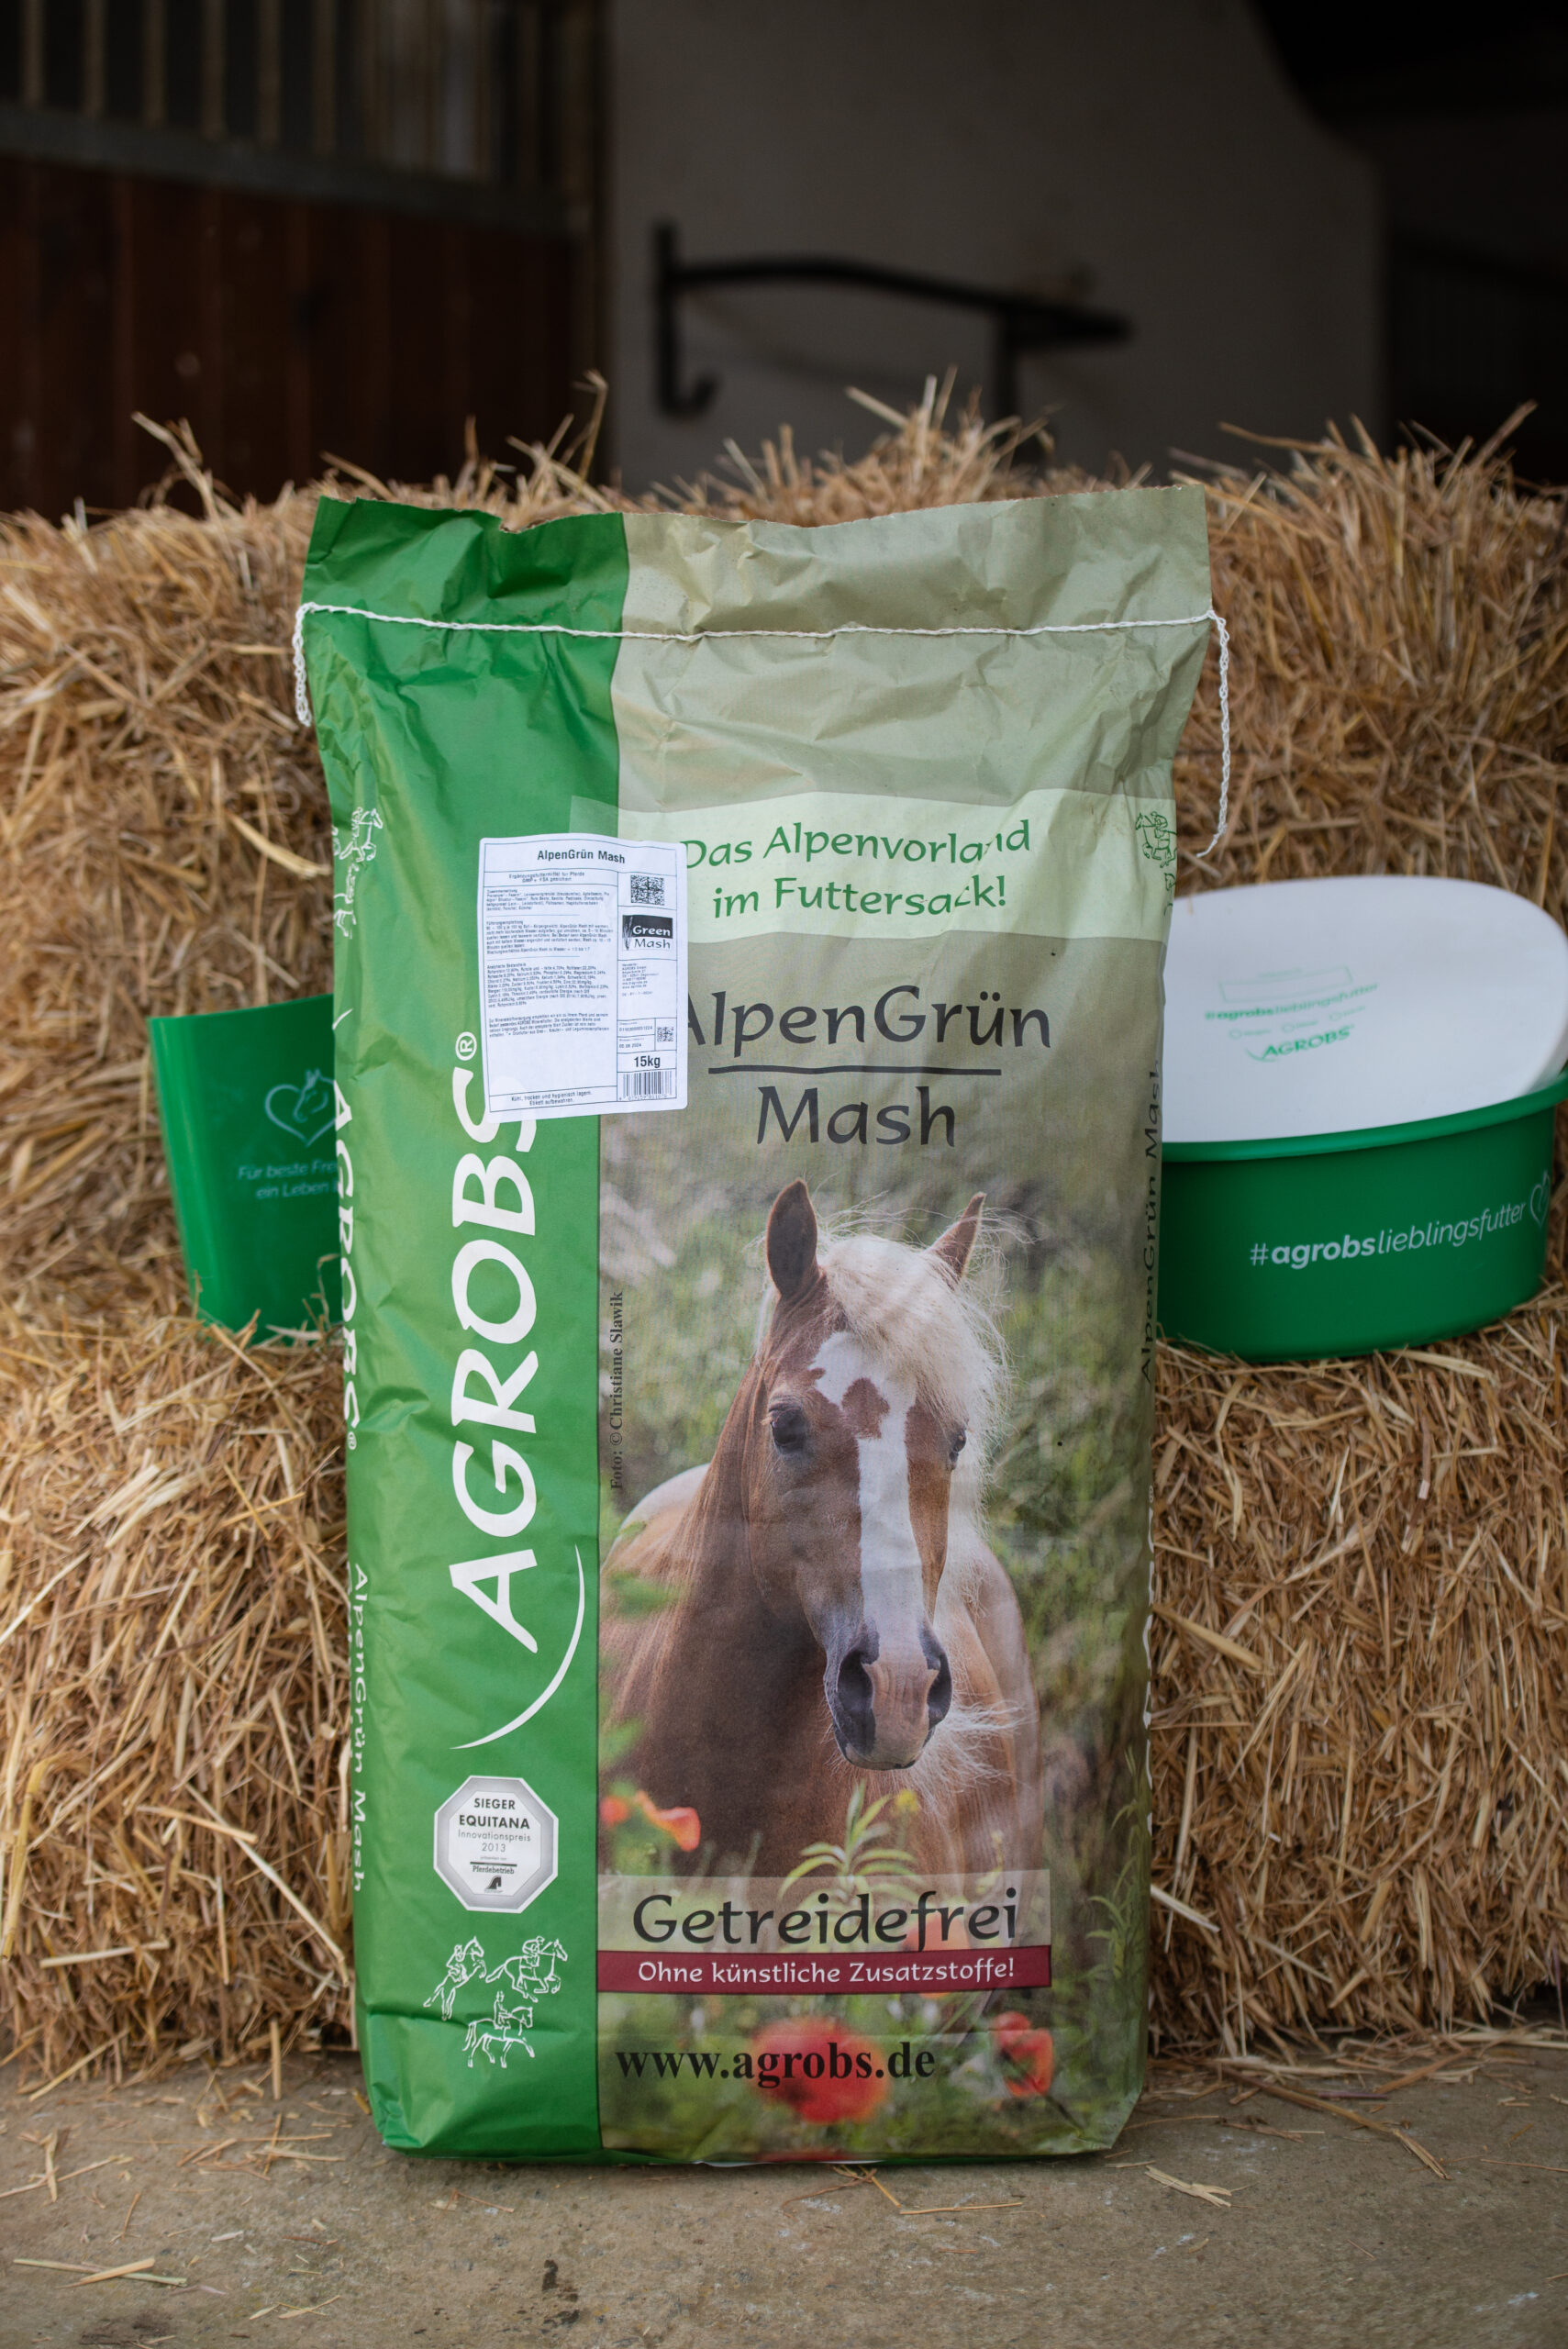 Product shot of big paper bag of Agrobs AlpenGruen Mash including feeding bowl and scoop